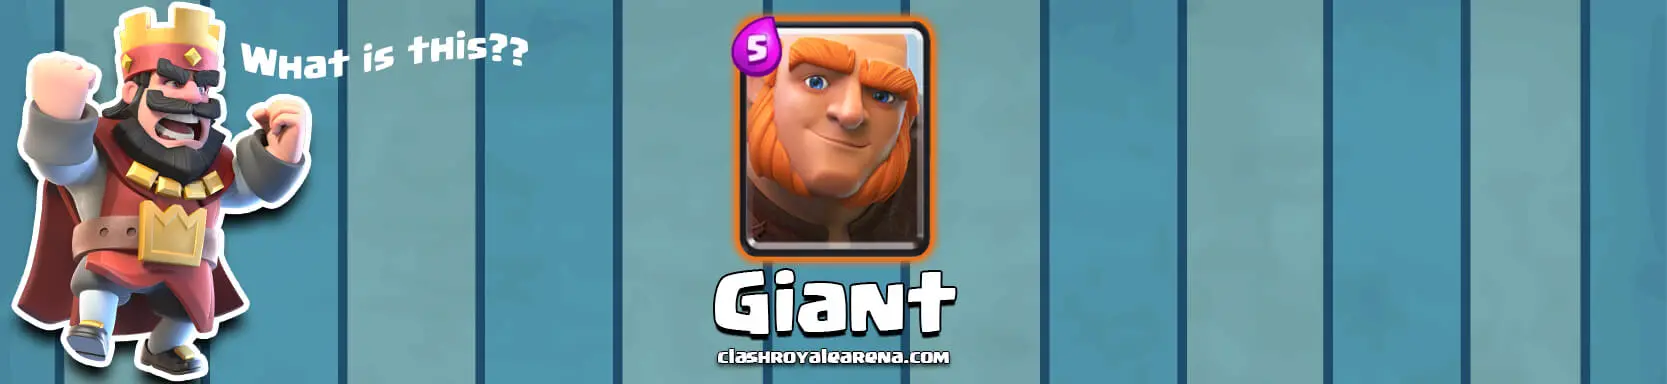 giant-clash-royale-card